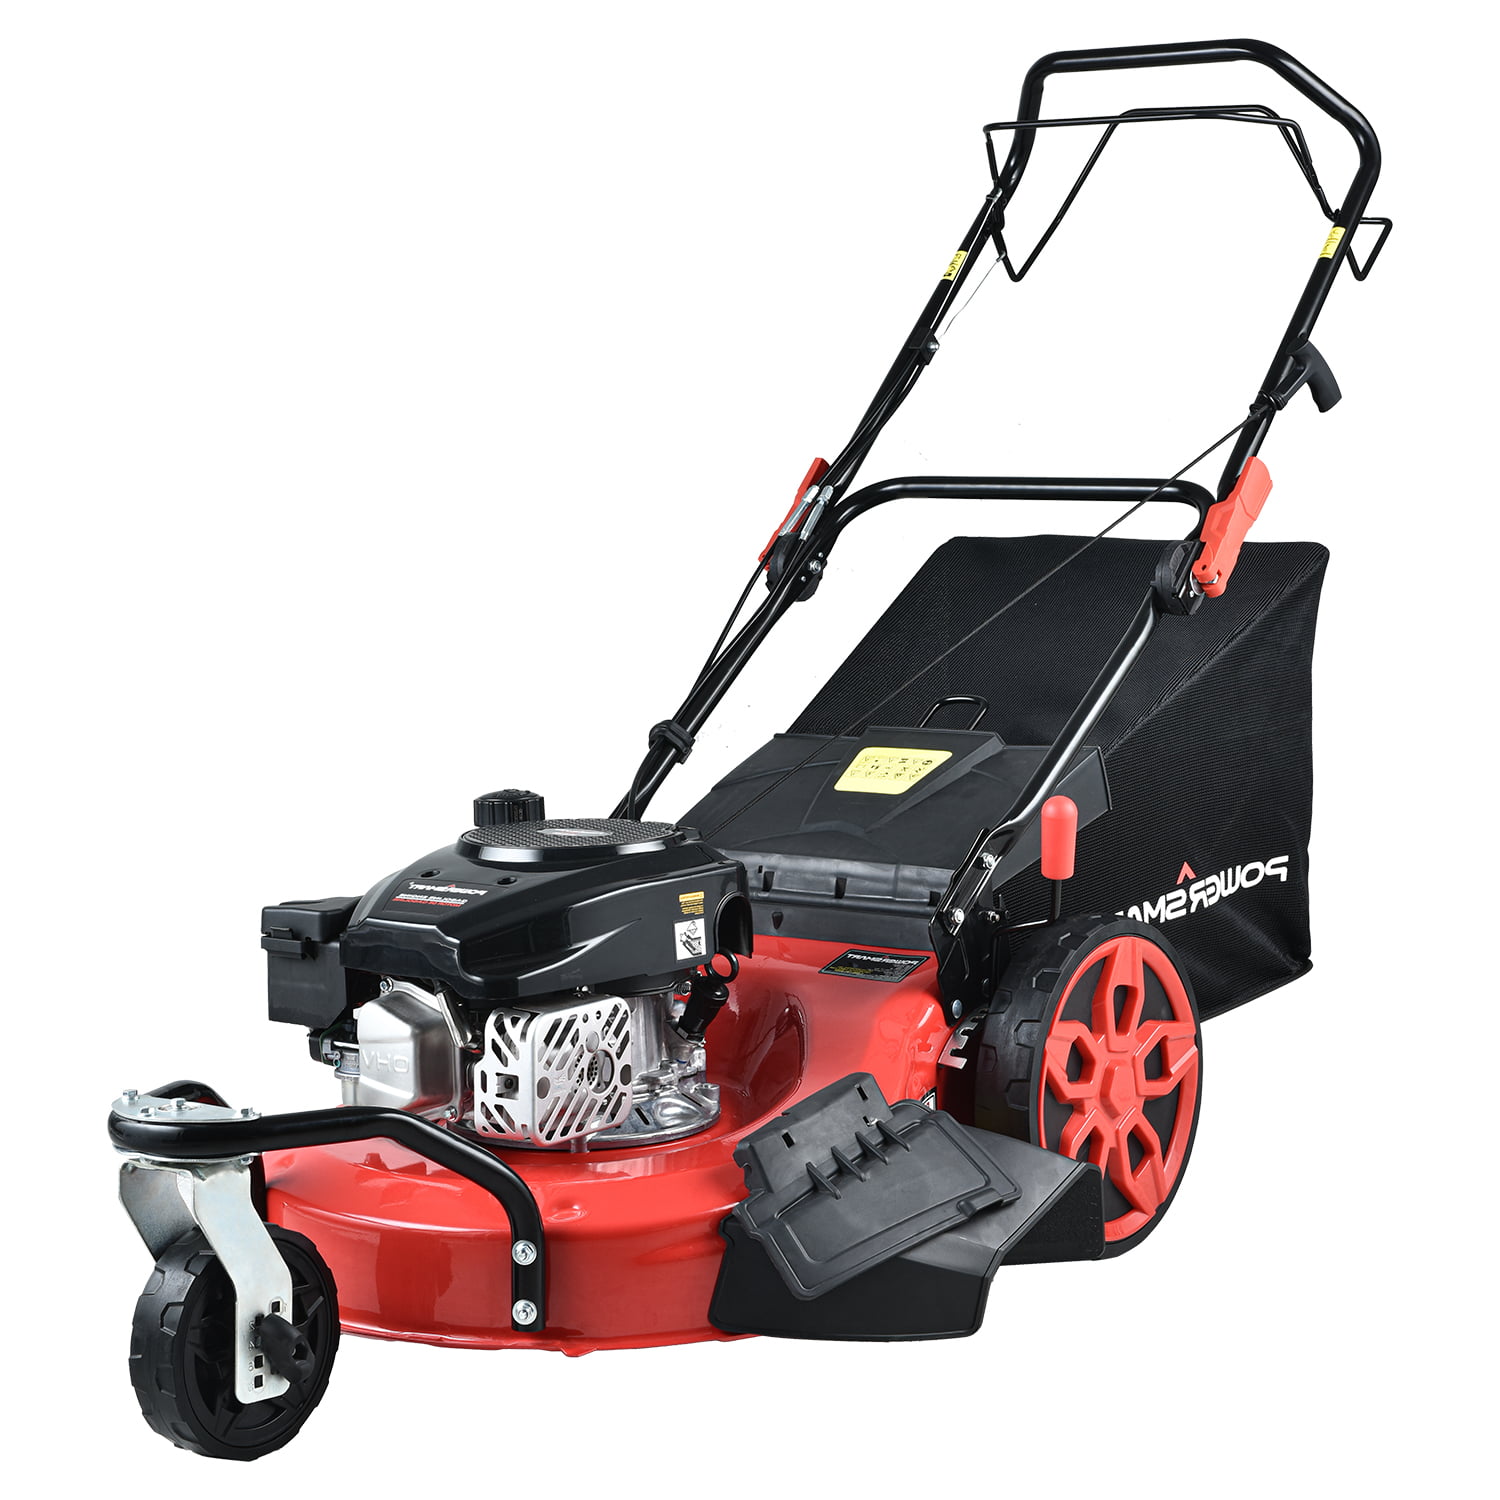 PowerSmart PSM2020 20 in. 3in1 170cc Gas Self Propelled Lawn Mower